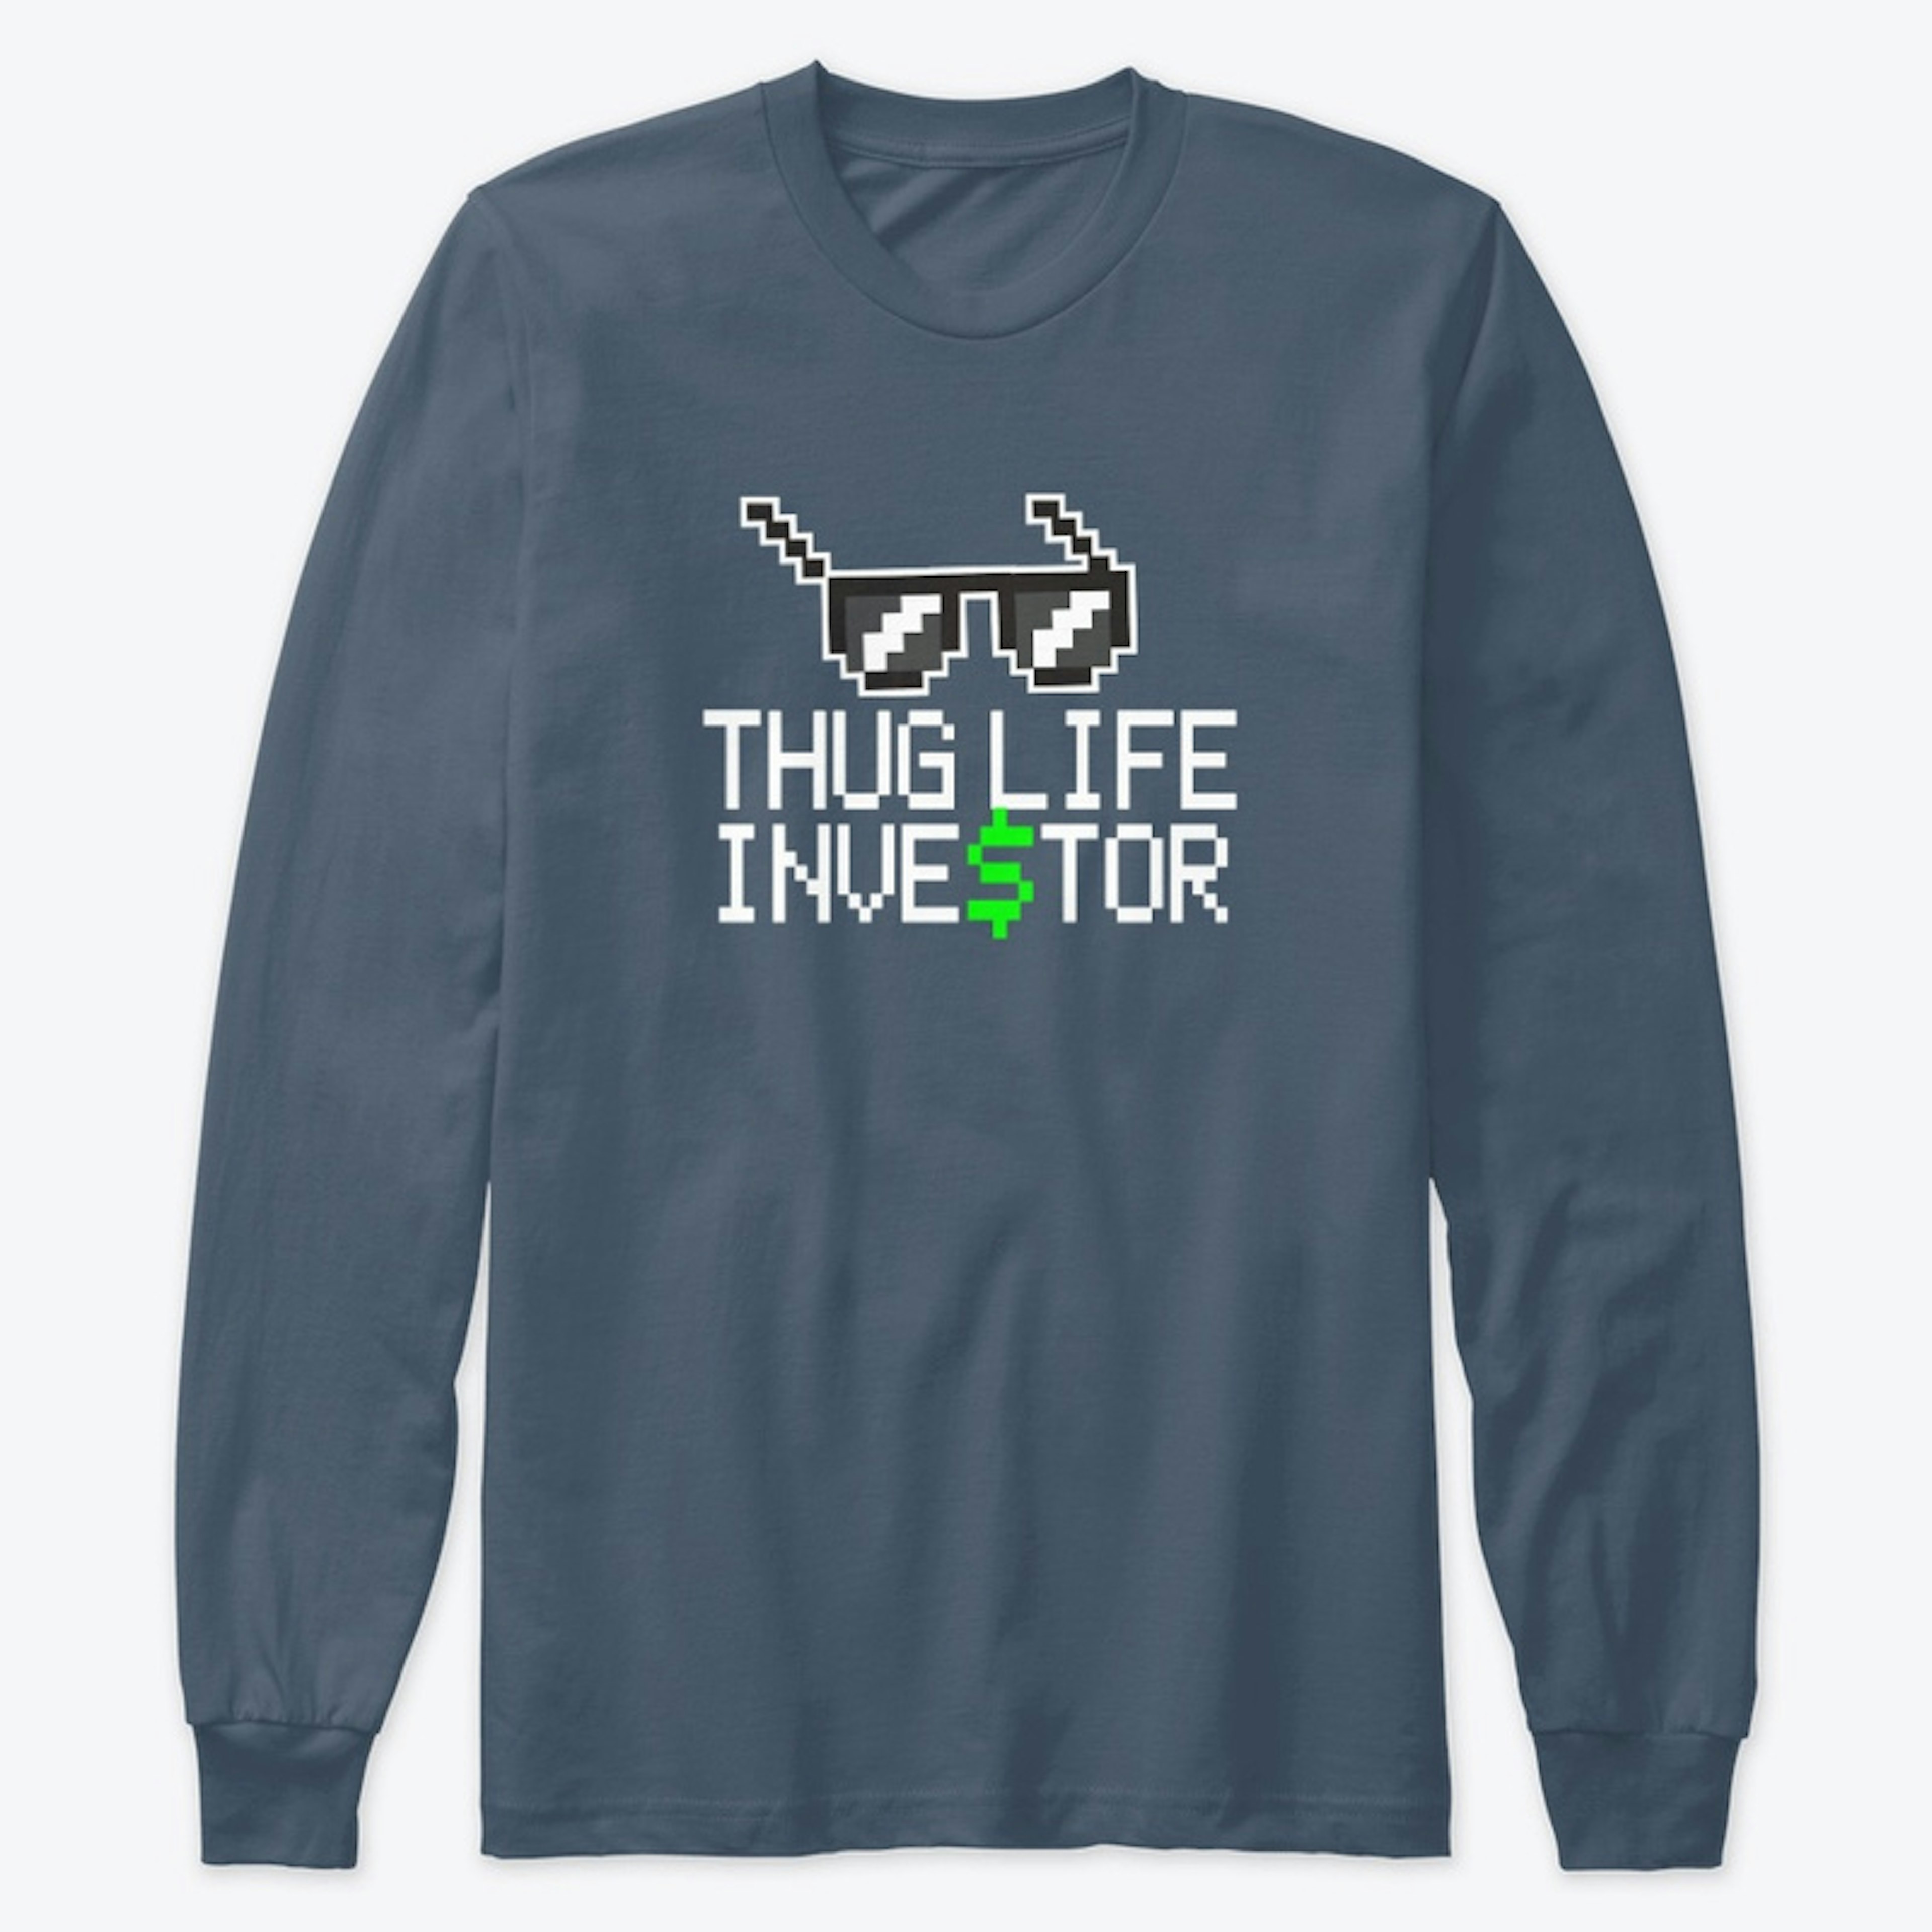 Thug Life Investor (Long Sleeve T-Shirt)